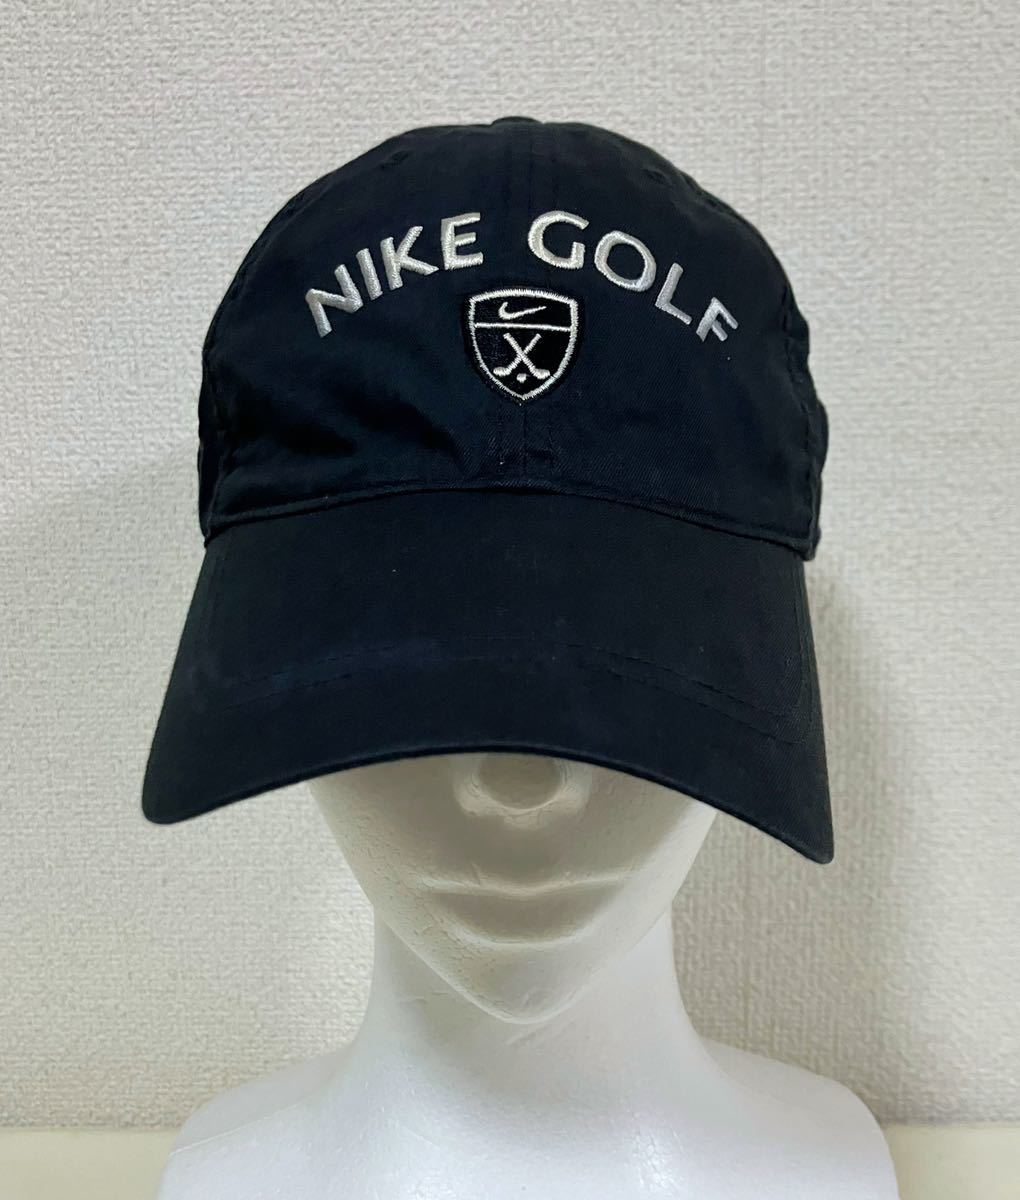 90*s 00*s NIKE GOLF Nike Golf cap hat black ONE SIZE